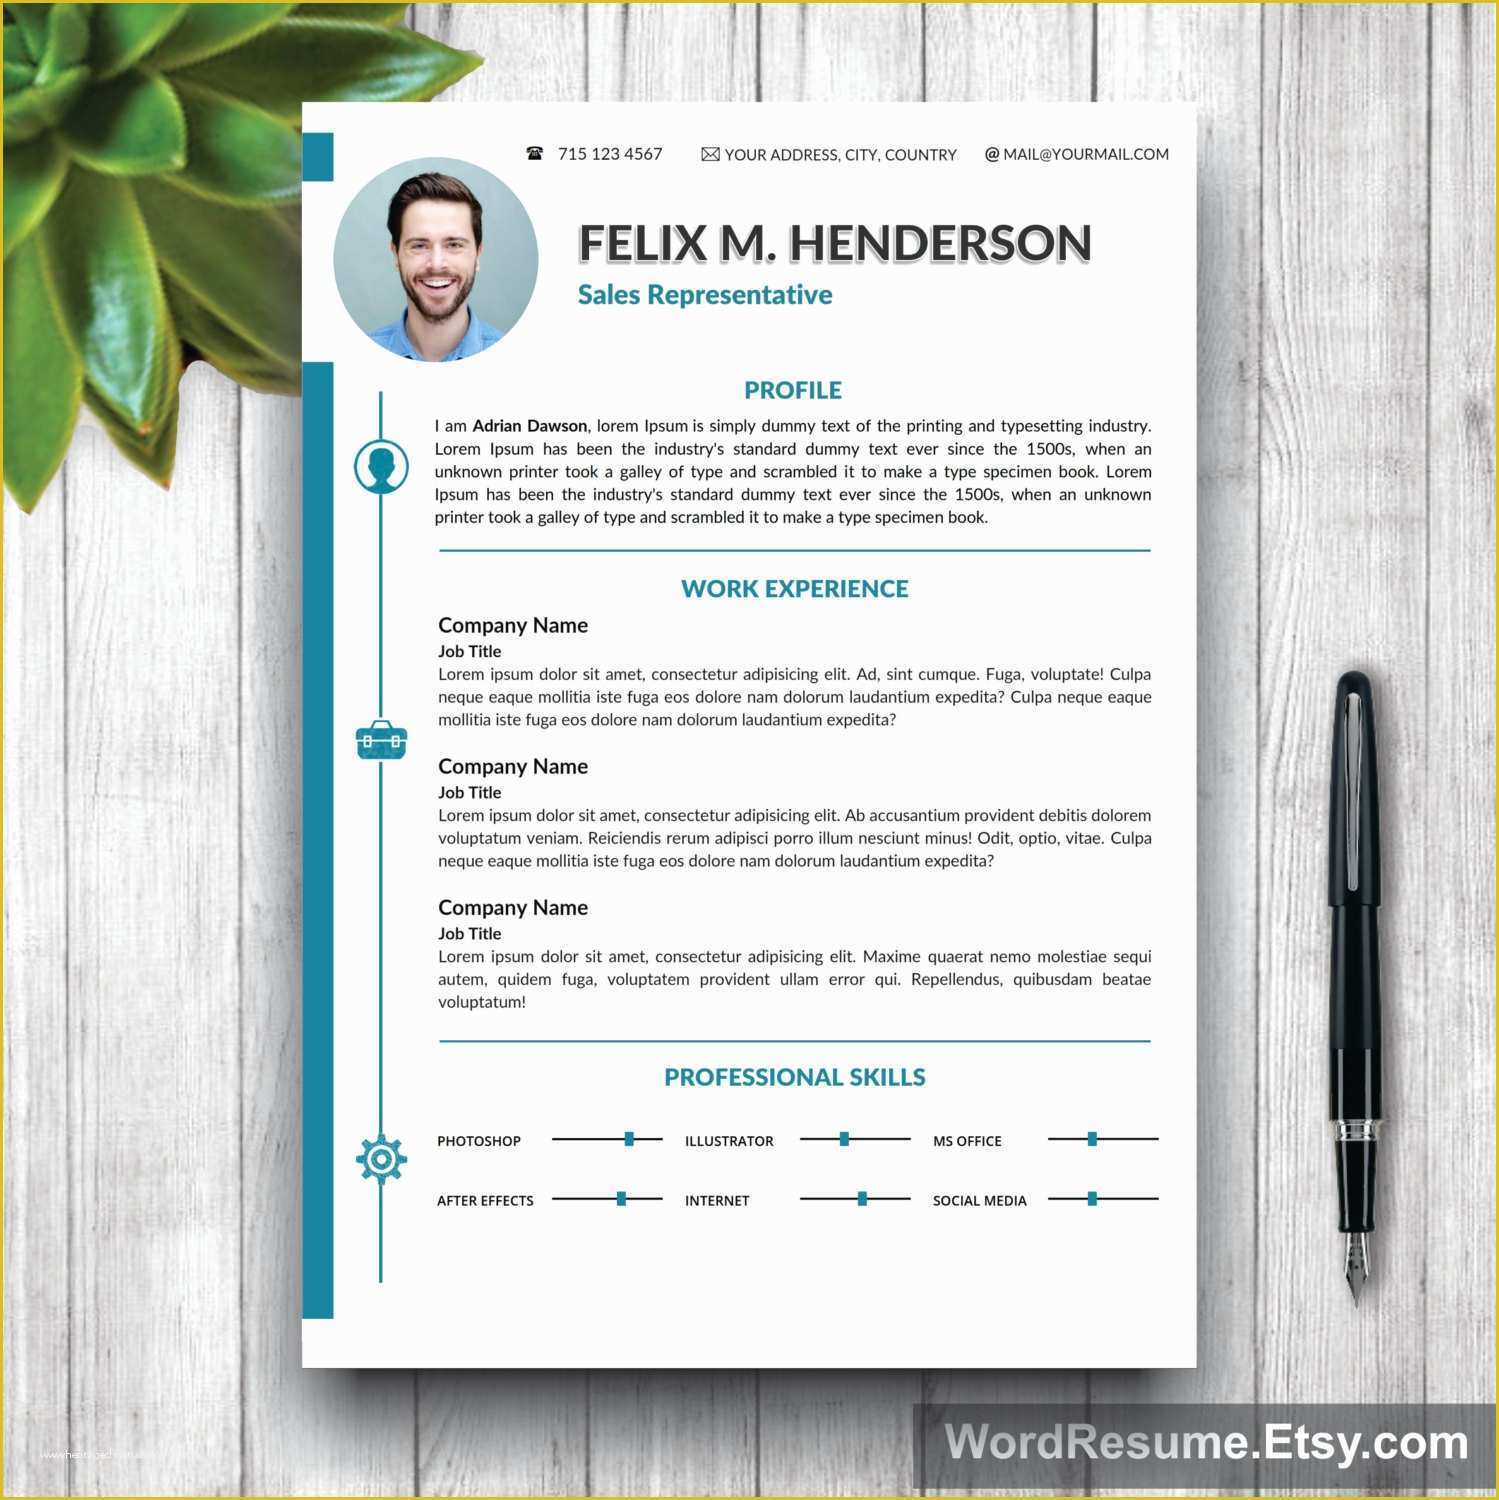 Resume Portfolio Template Free Of Resume Template Modern Cover Letter Portfolio Word Cv